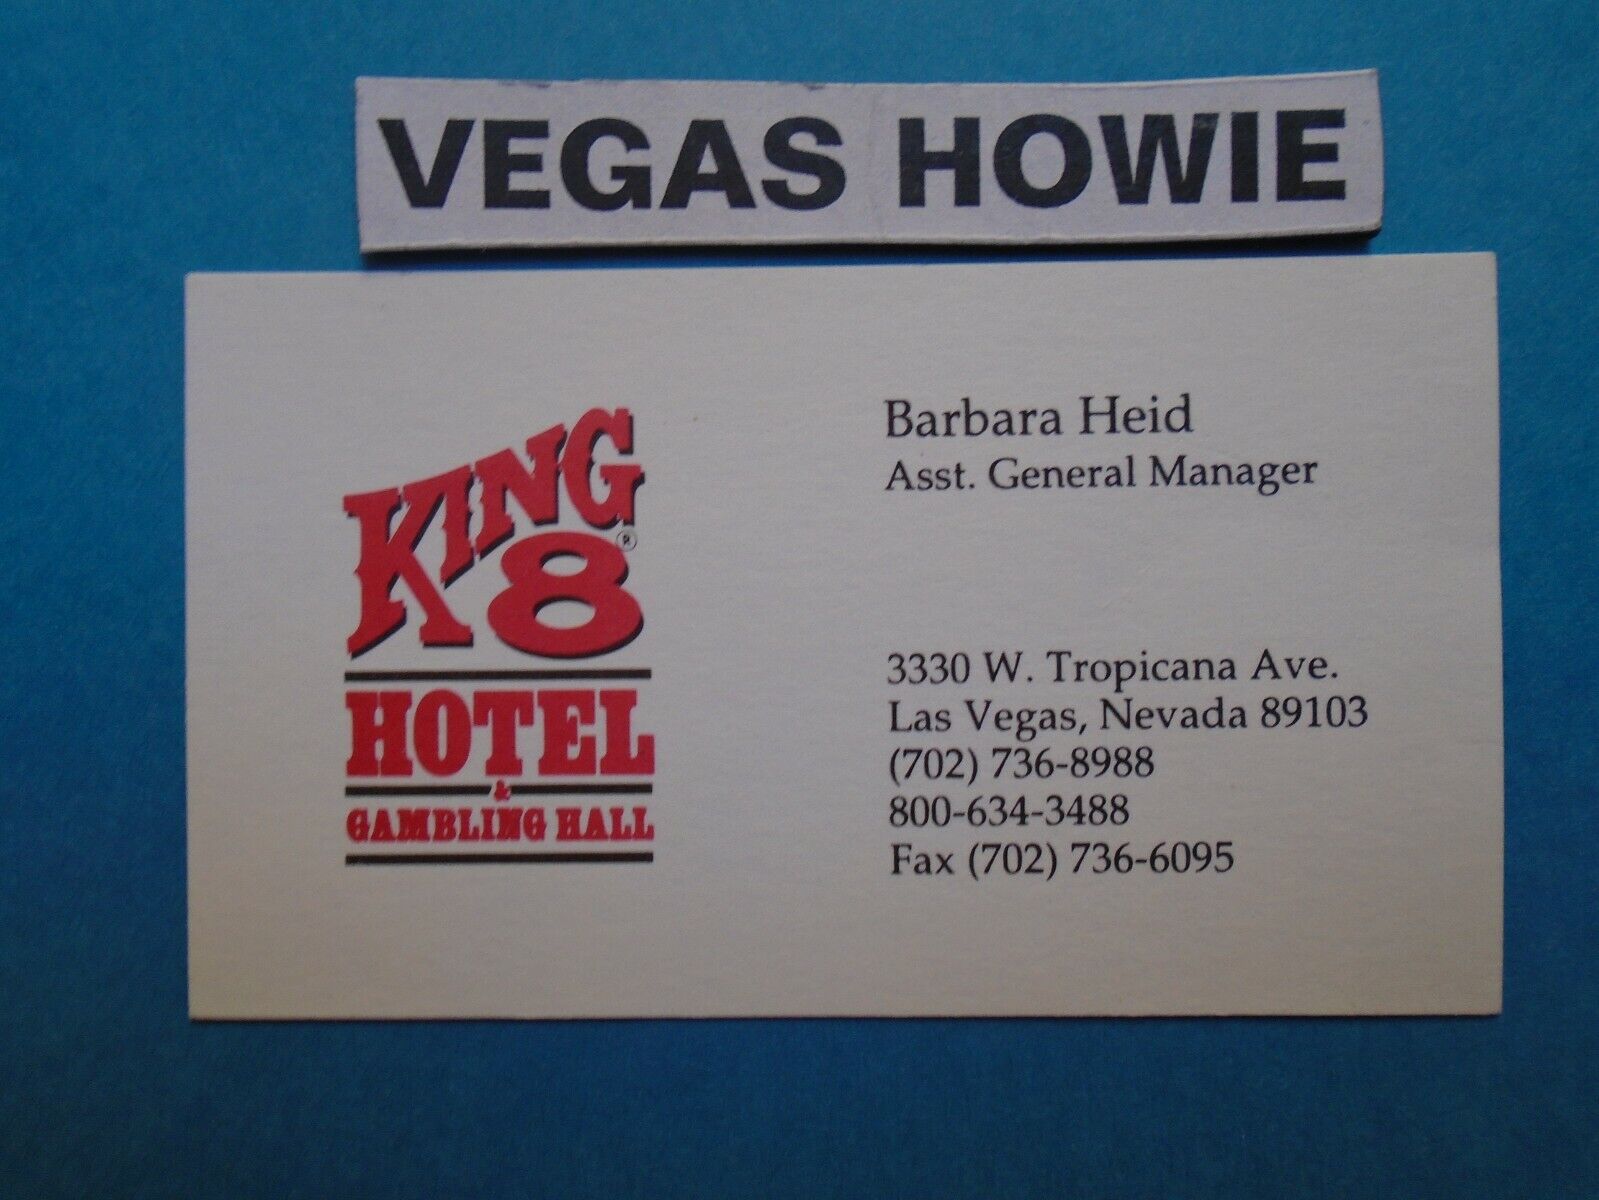 VEGAS HOWIE 1 King 8 Hotel Casino Business Card Nevada BARBARA HEID Asst. GM